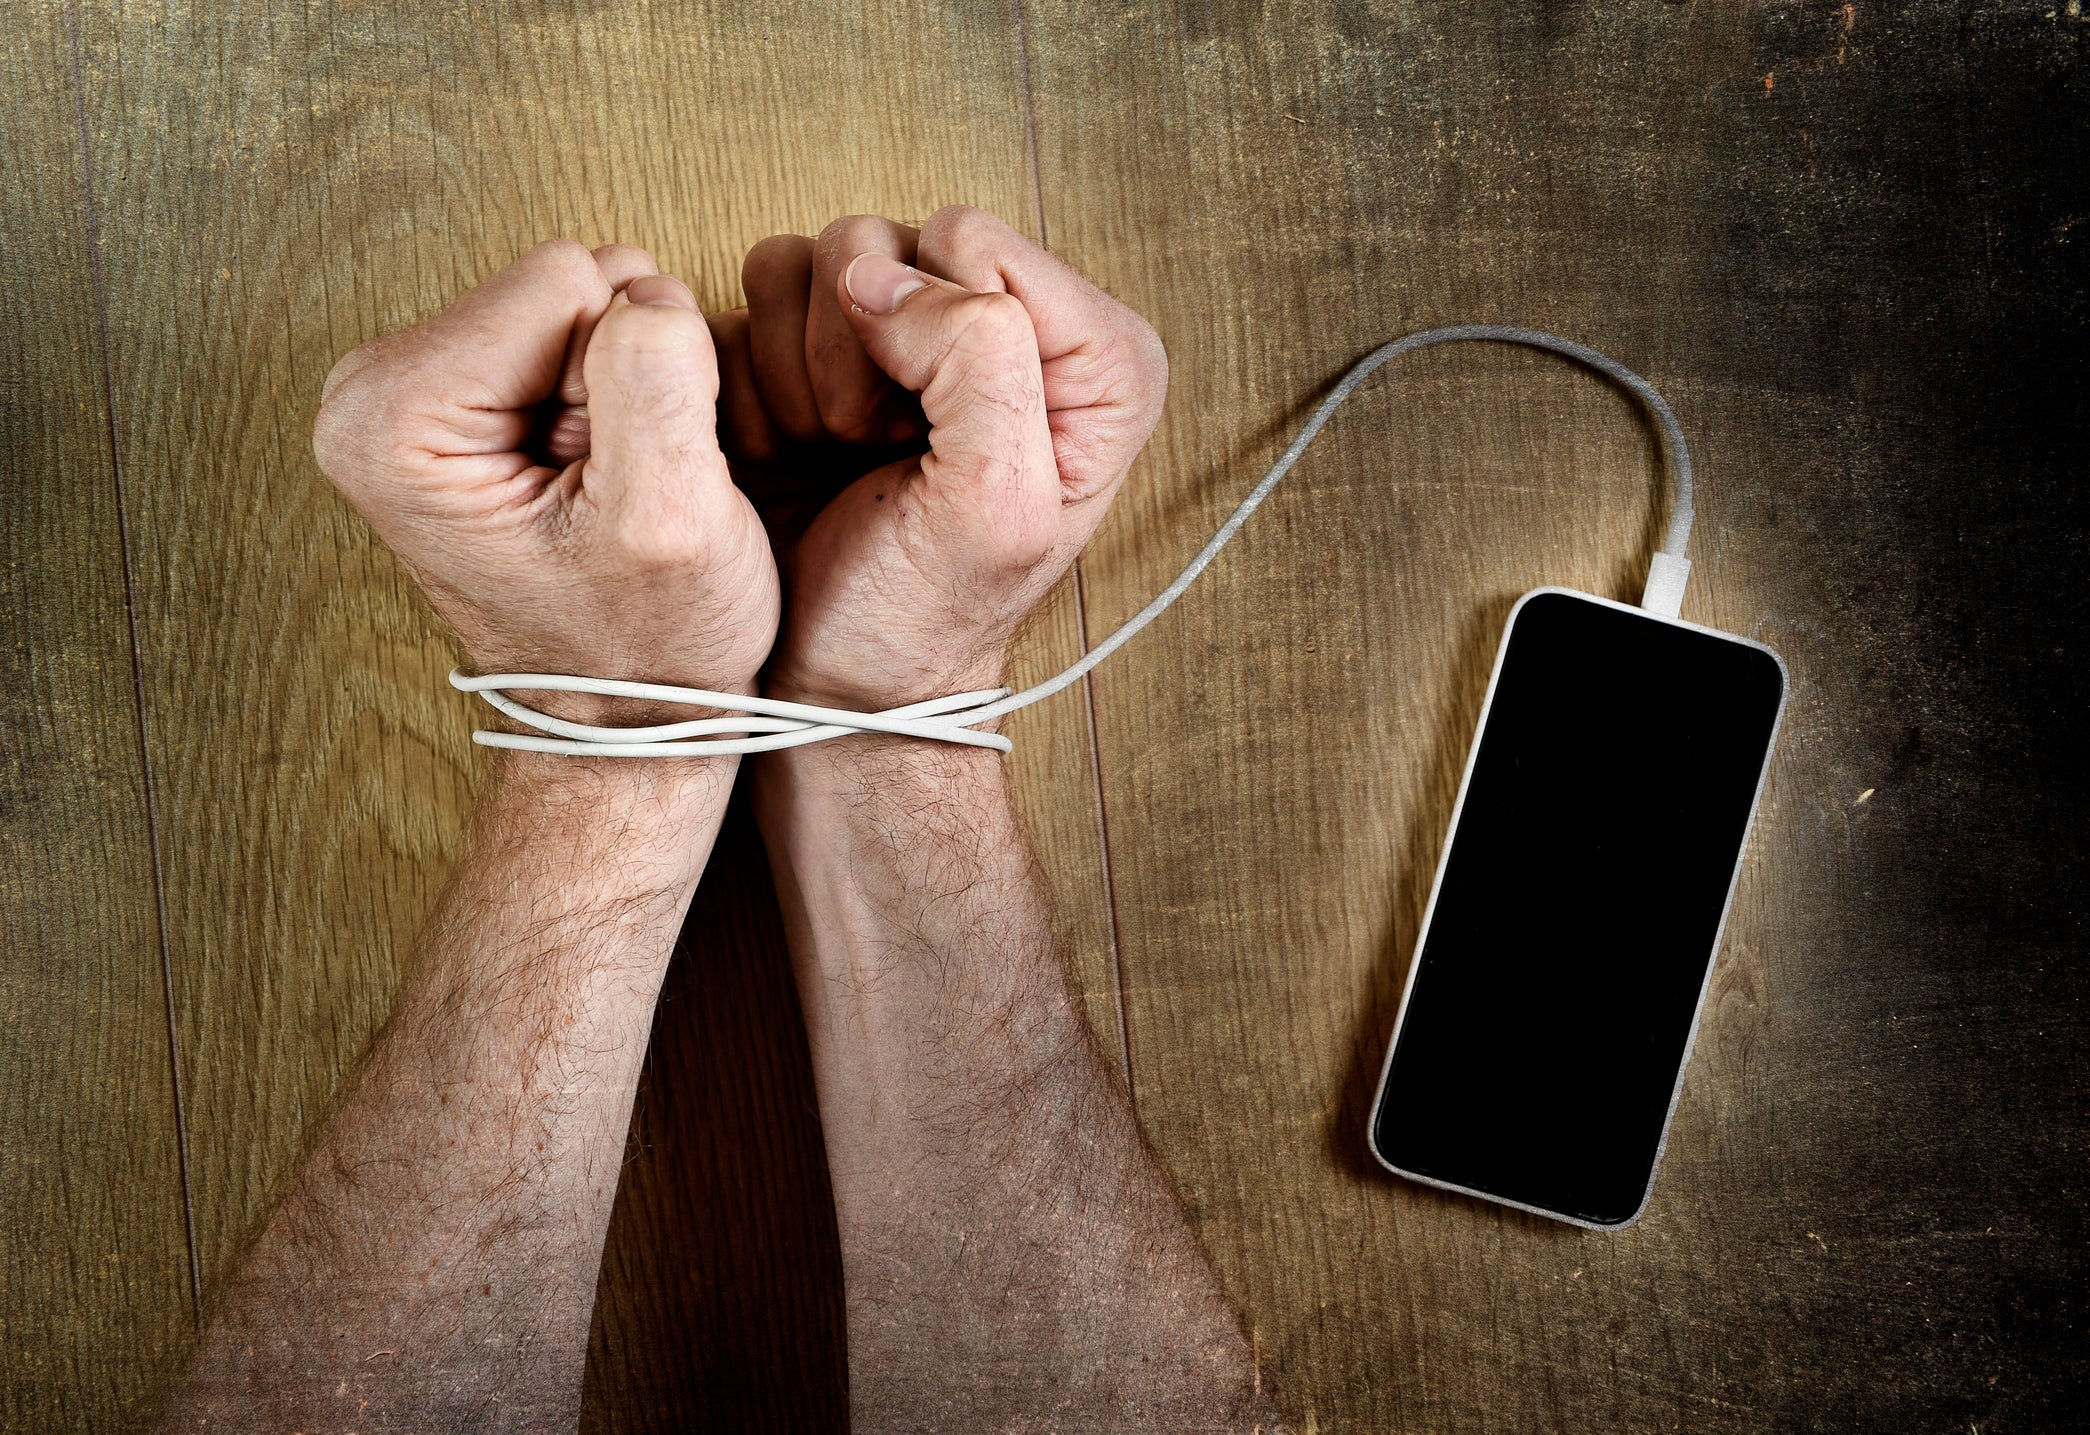 Three Practical Ways To Break Your Smartphone Addiction